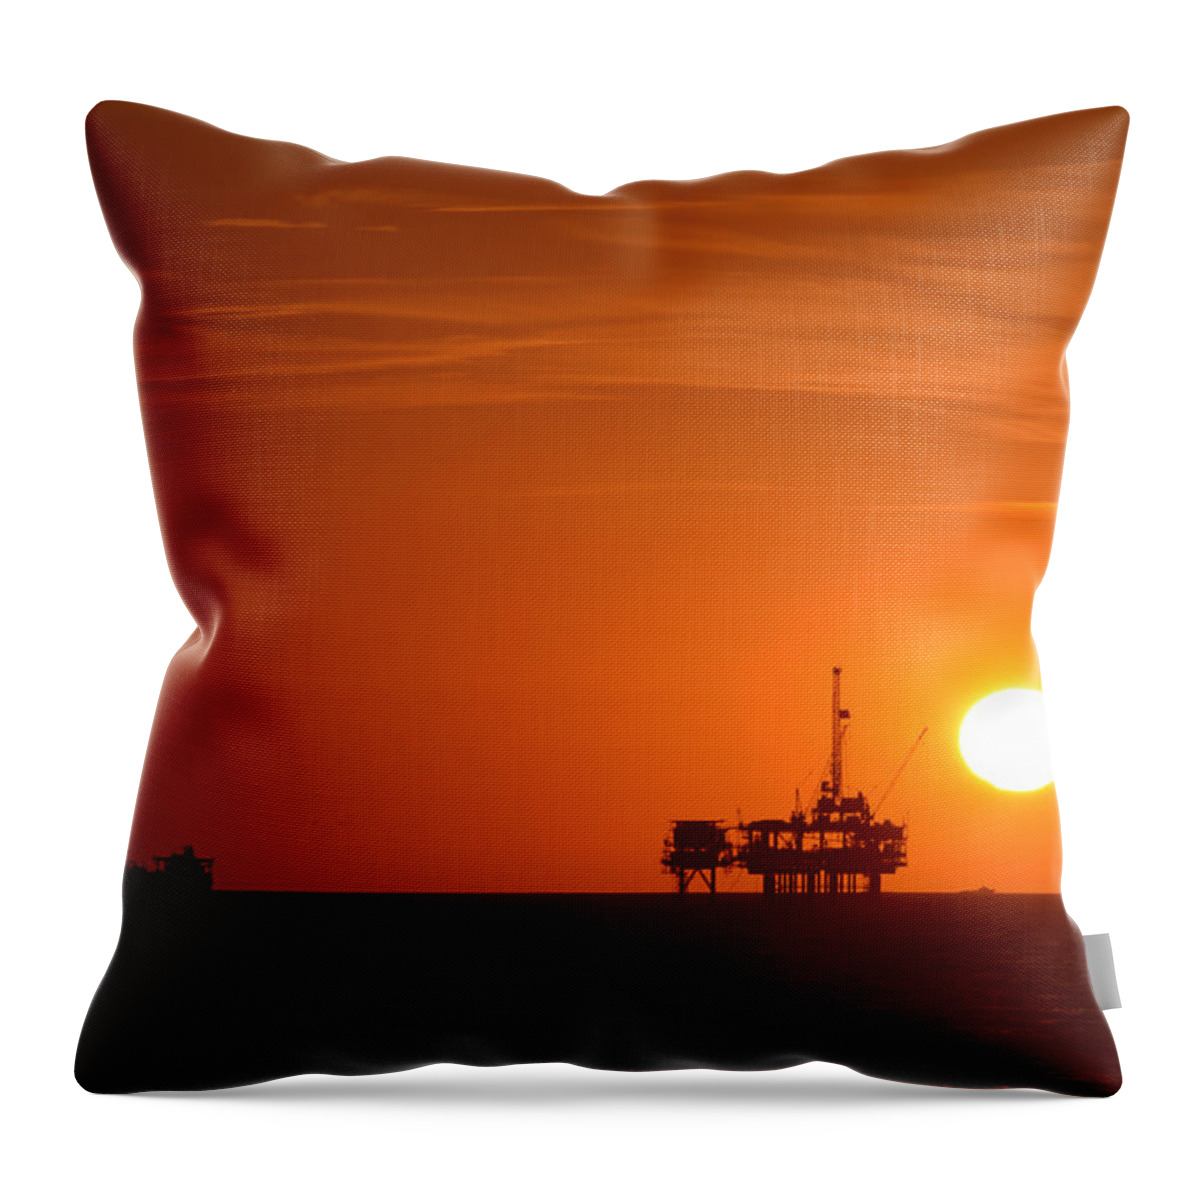 Oil Rigs Off Huntington Beach California Throw Pillow featuring the photograph Oil Rigs Huntington Beach by William Kimble